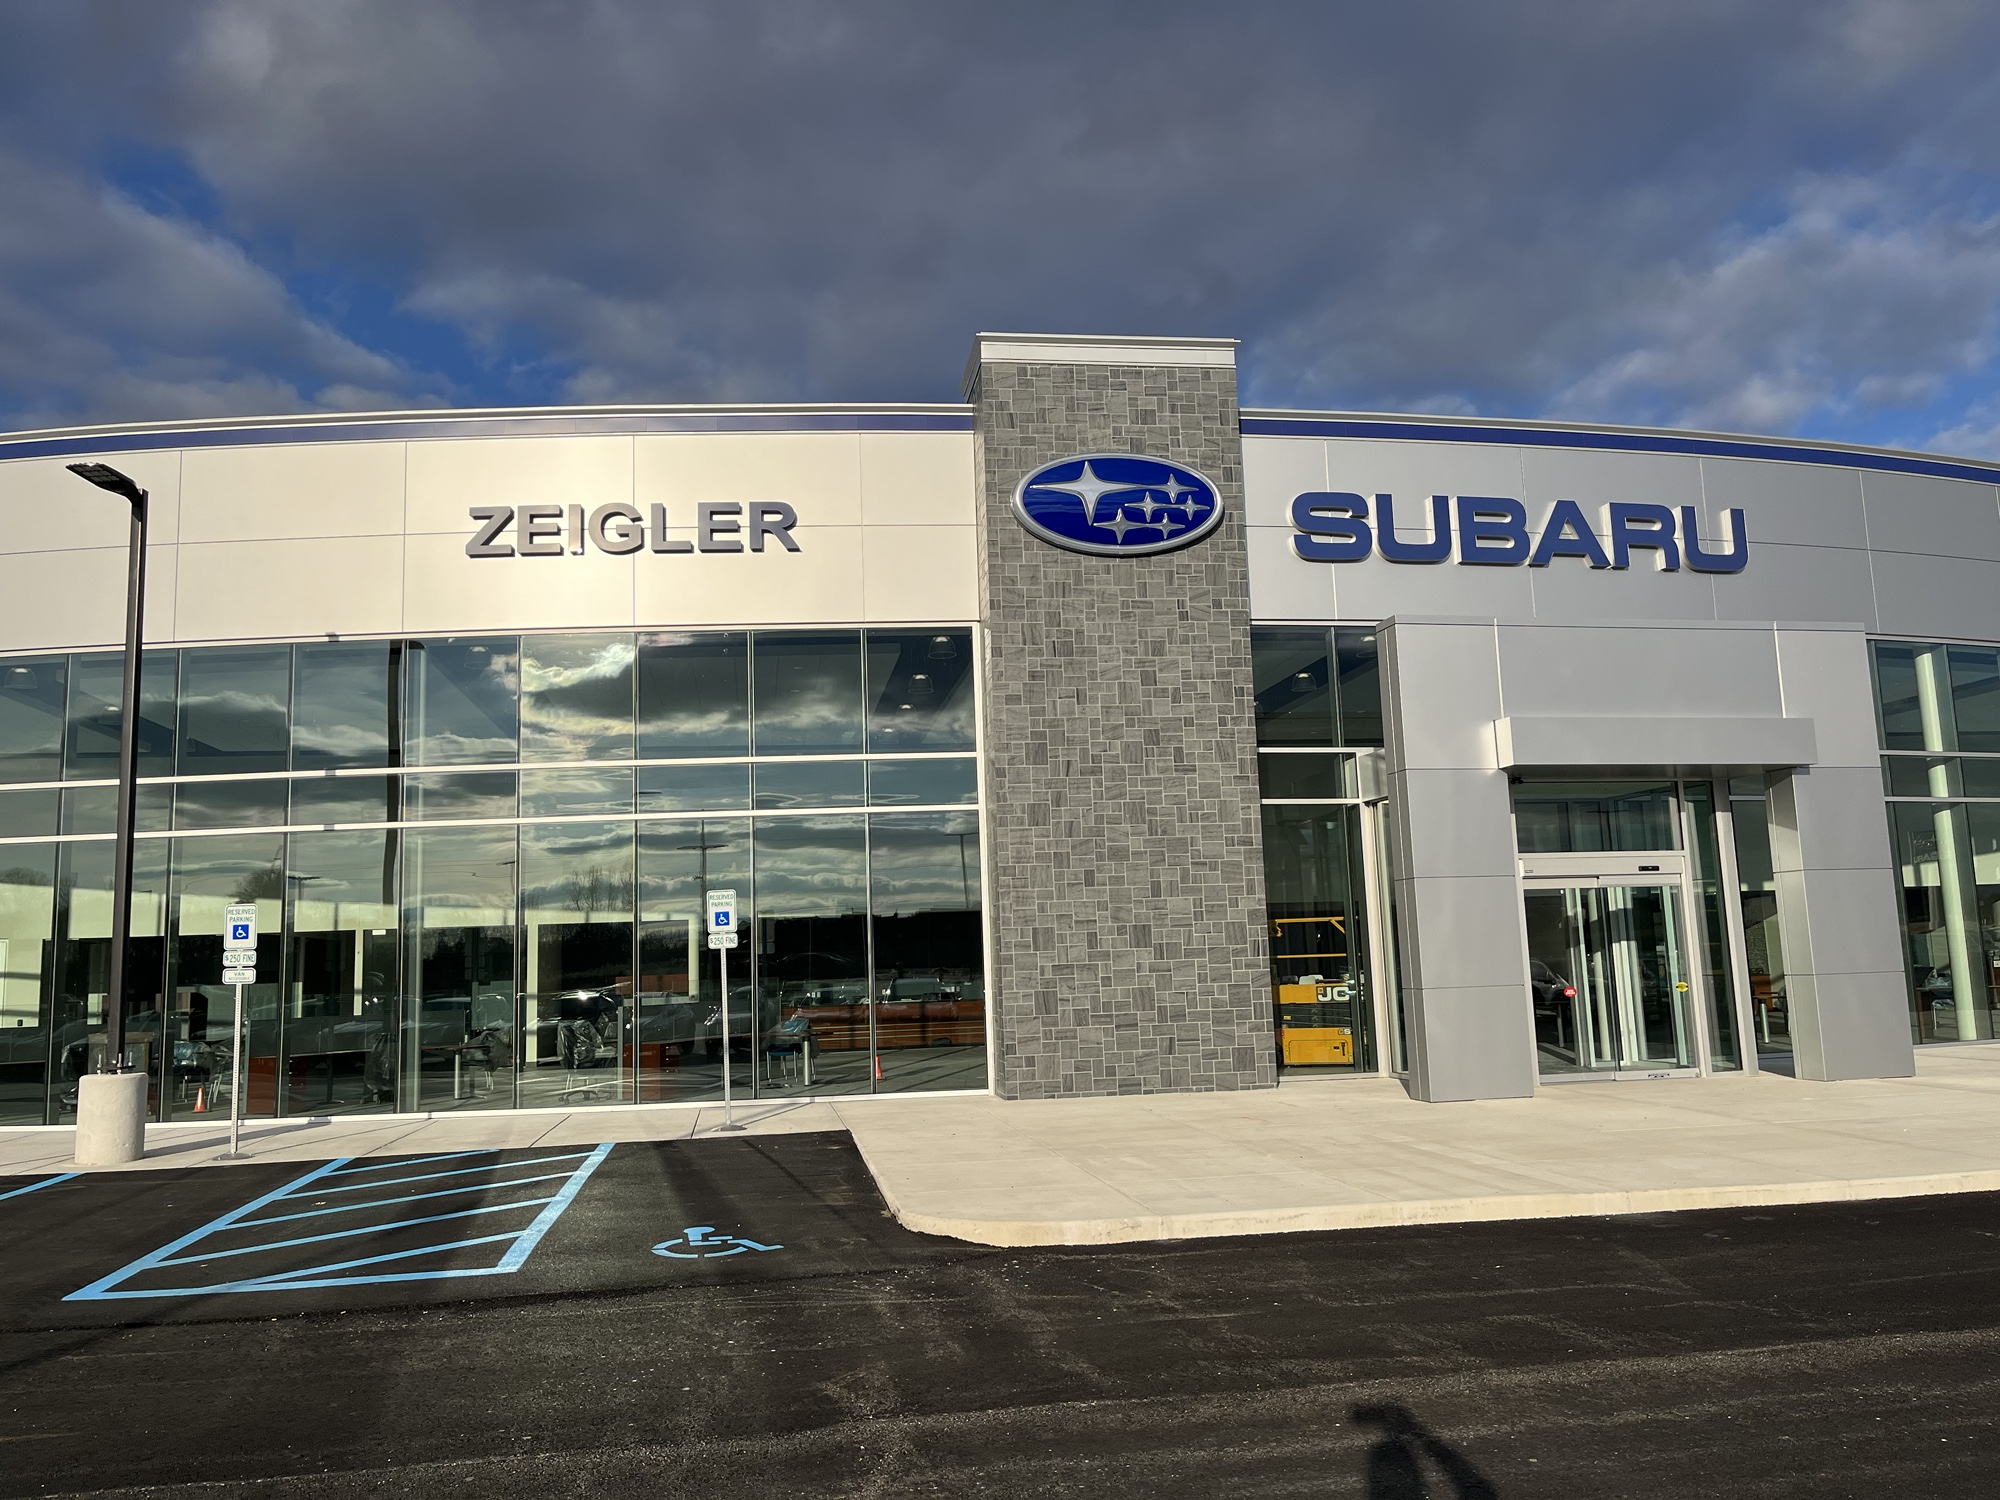 Zeigler Subaru, Schererville Indiana